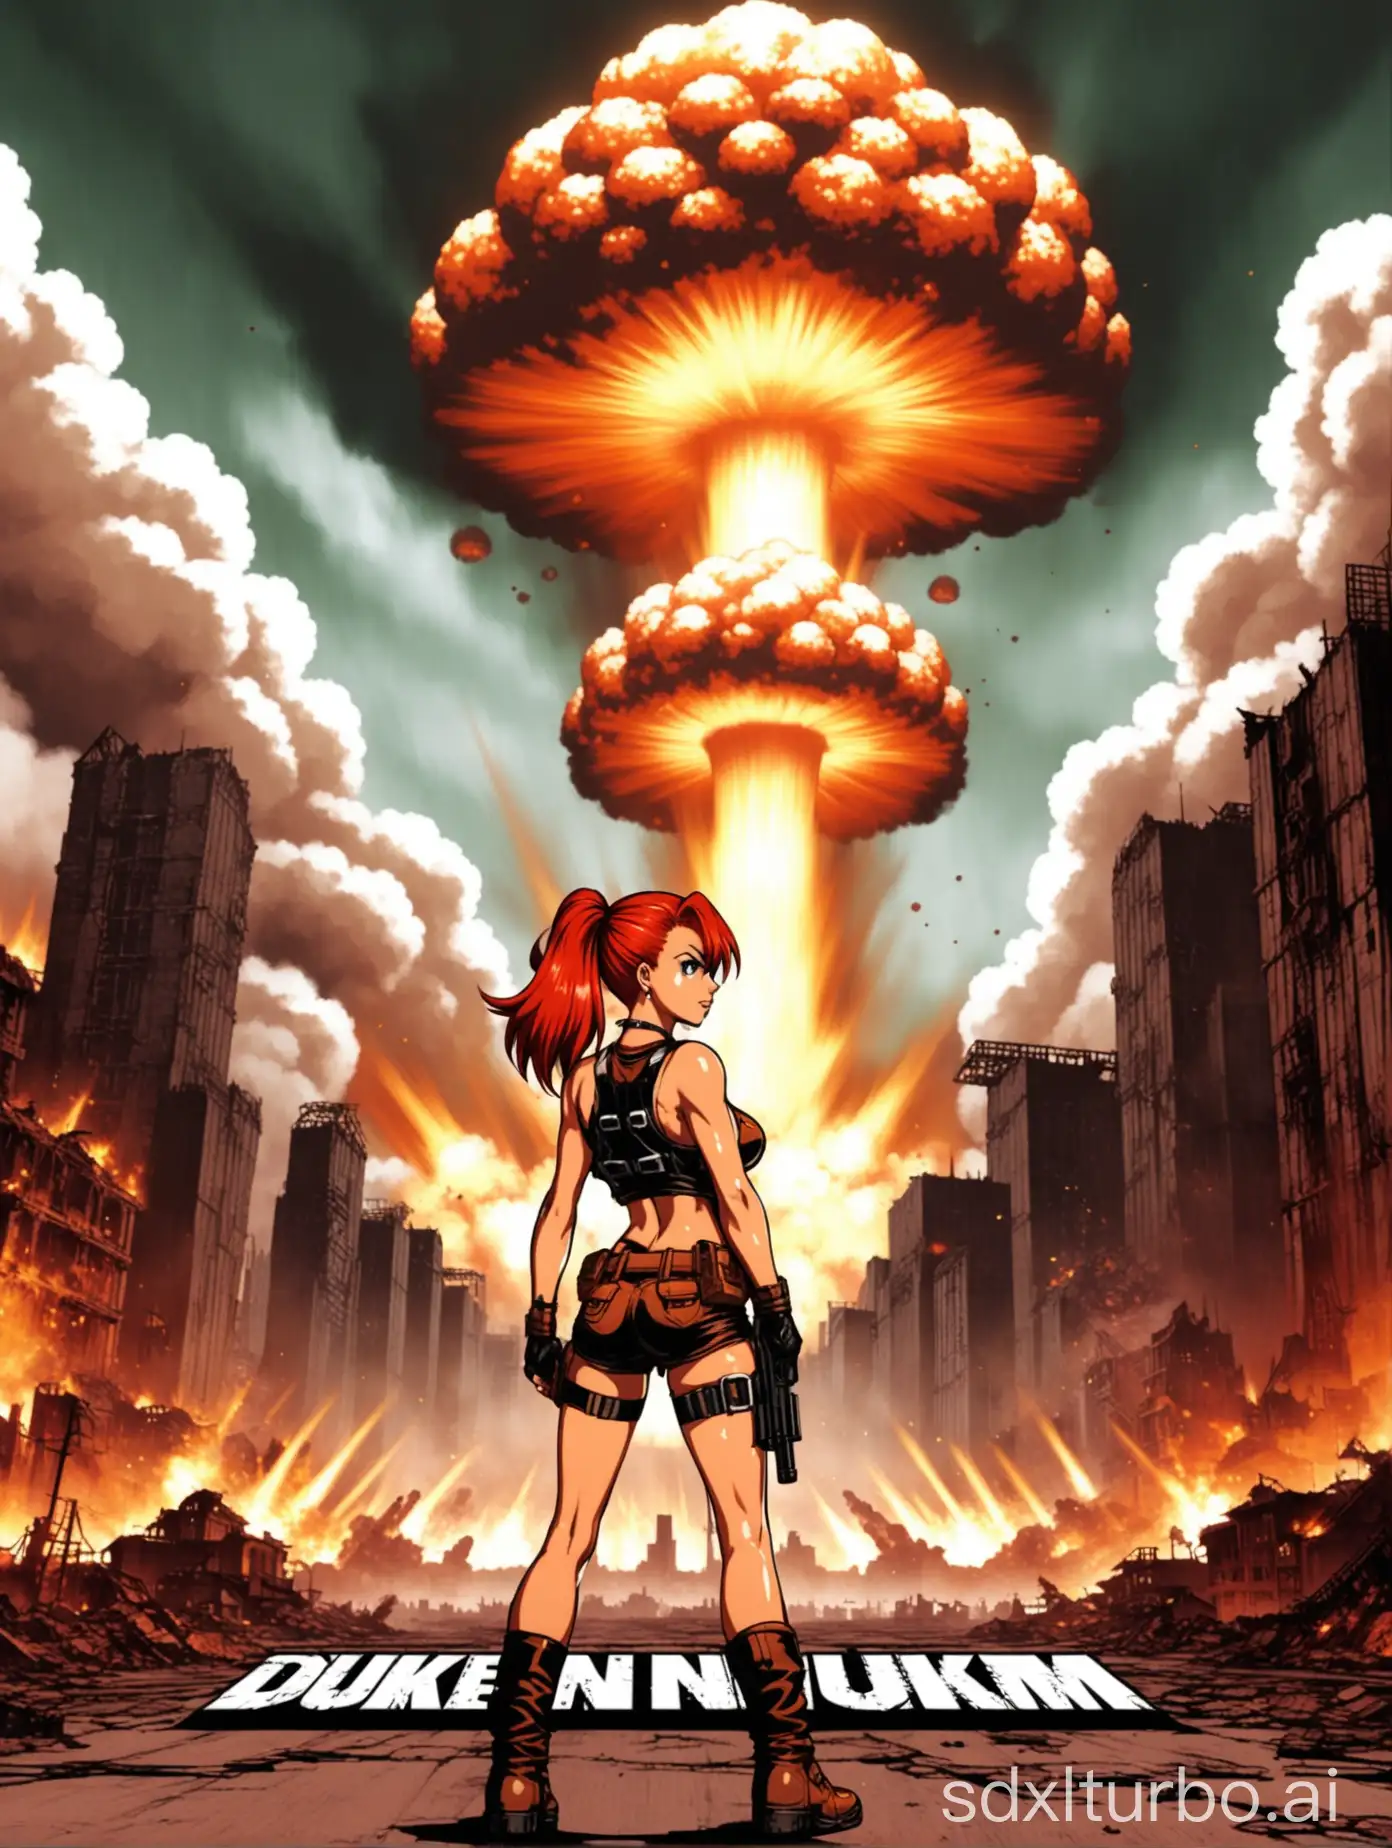 redhead anime girl in Duke Nukem 3D title screen, mushroom cloud in the background, destroyed city setting